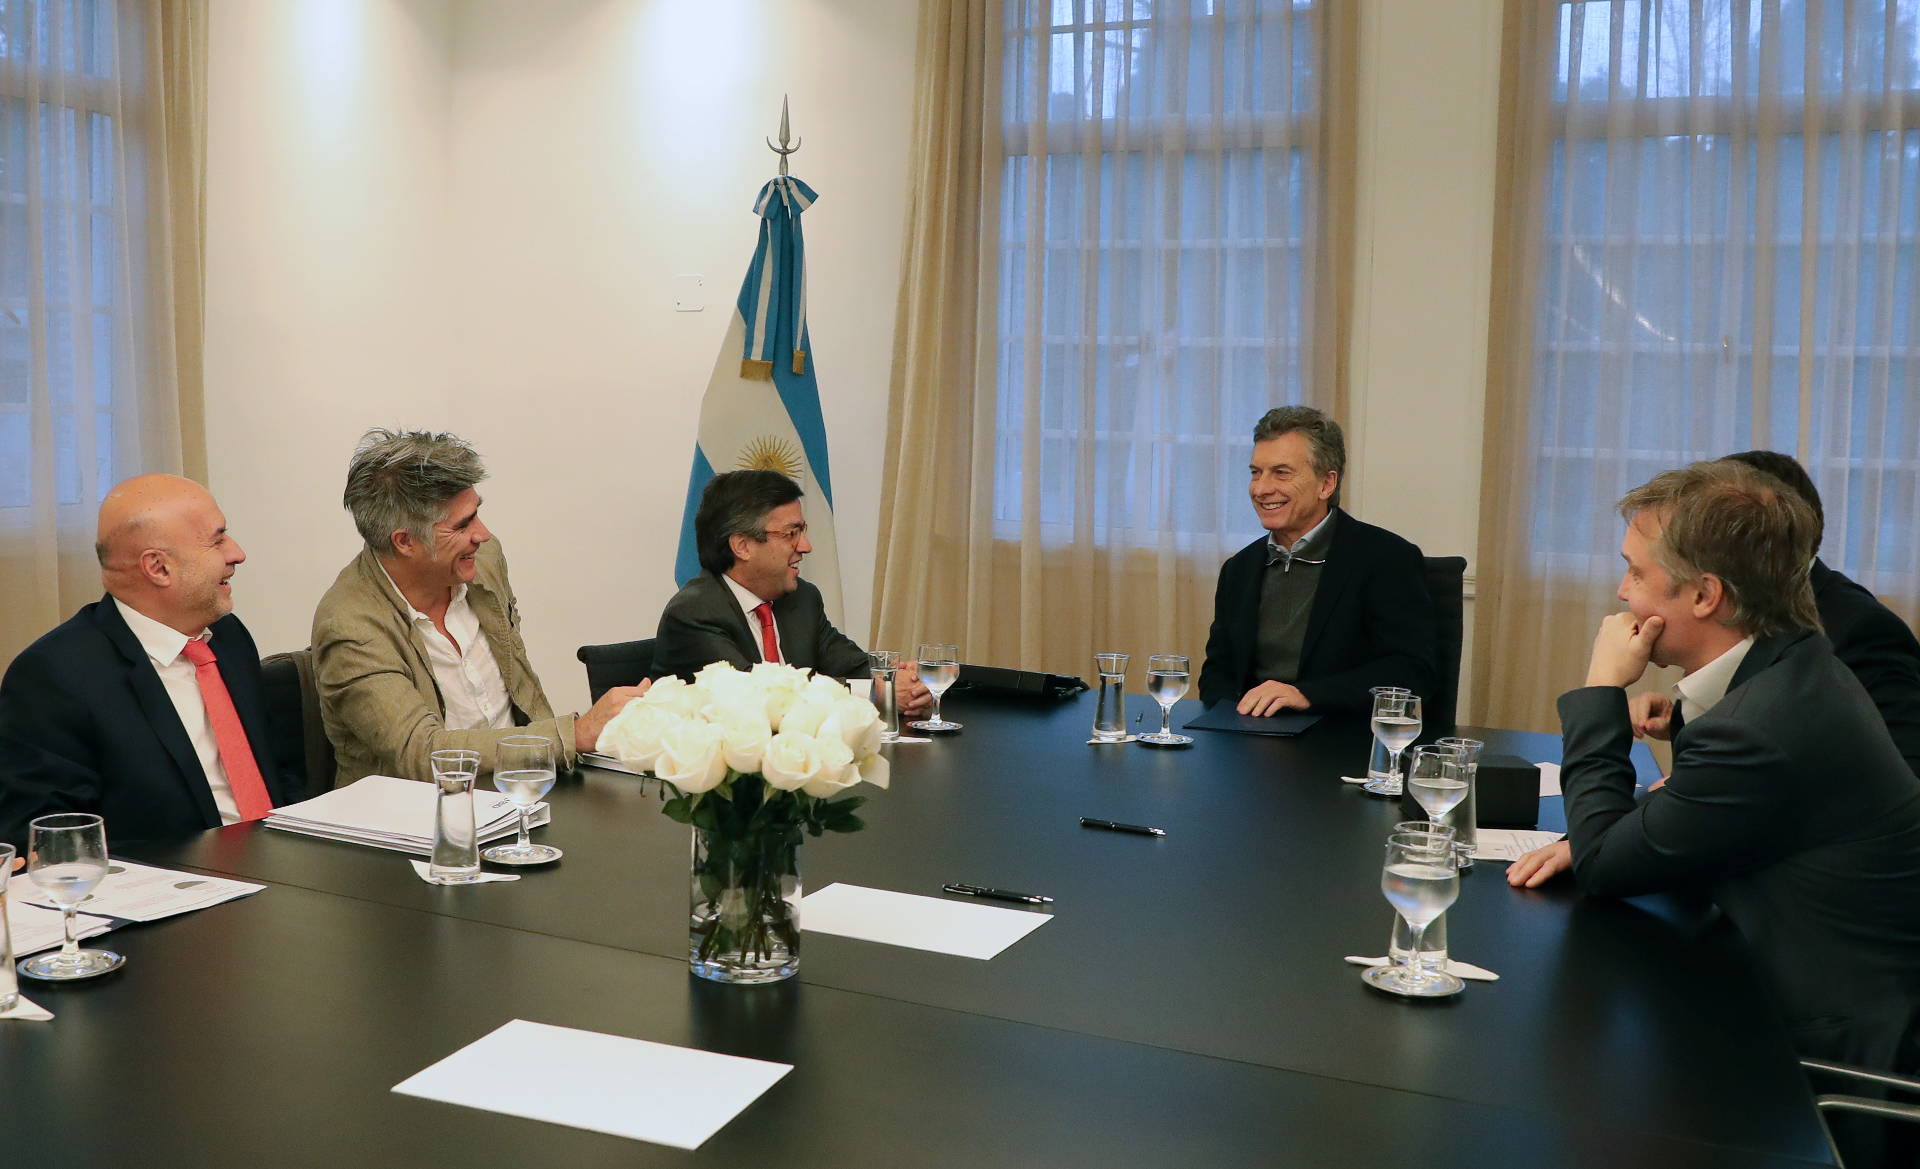 El presidente Macri recibió al titular del BID